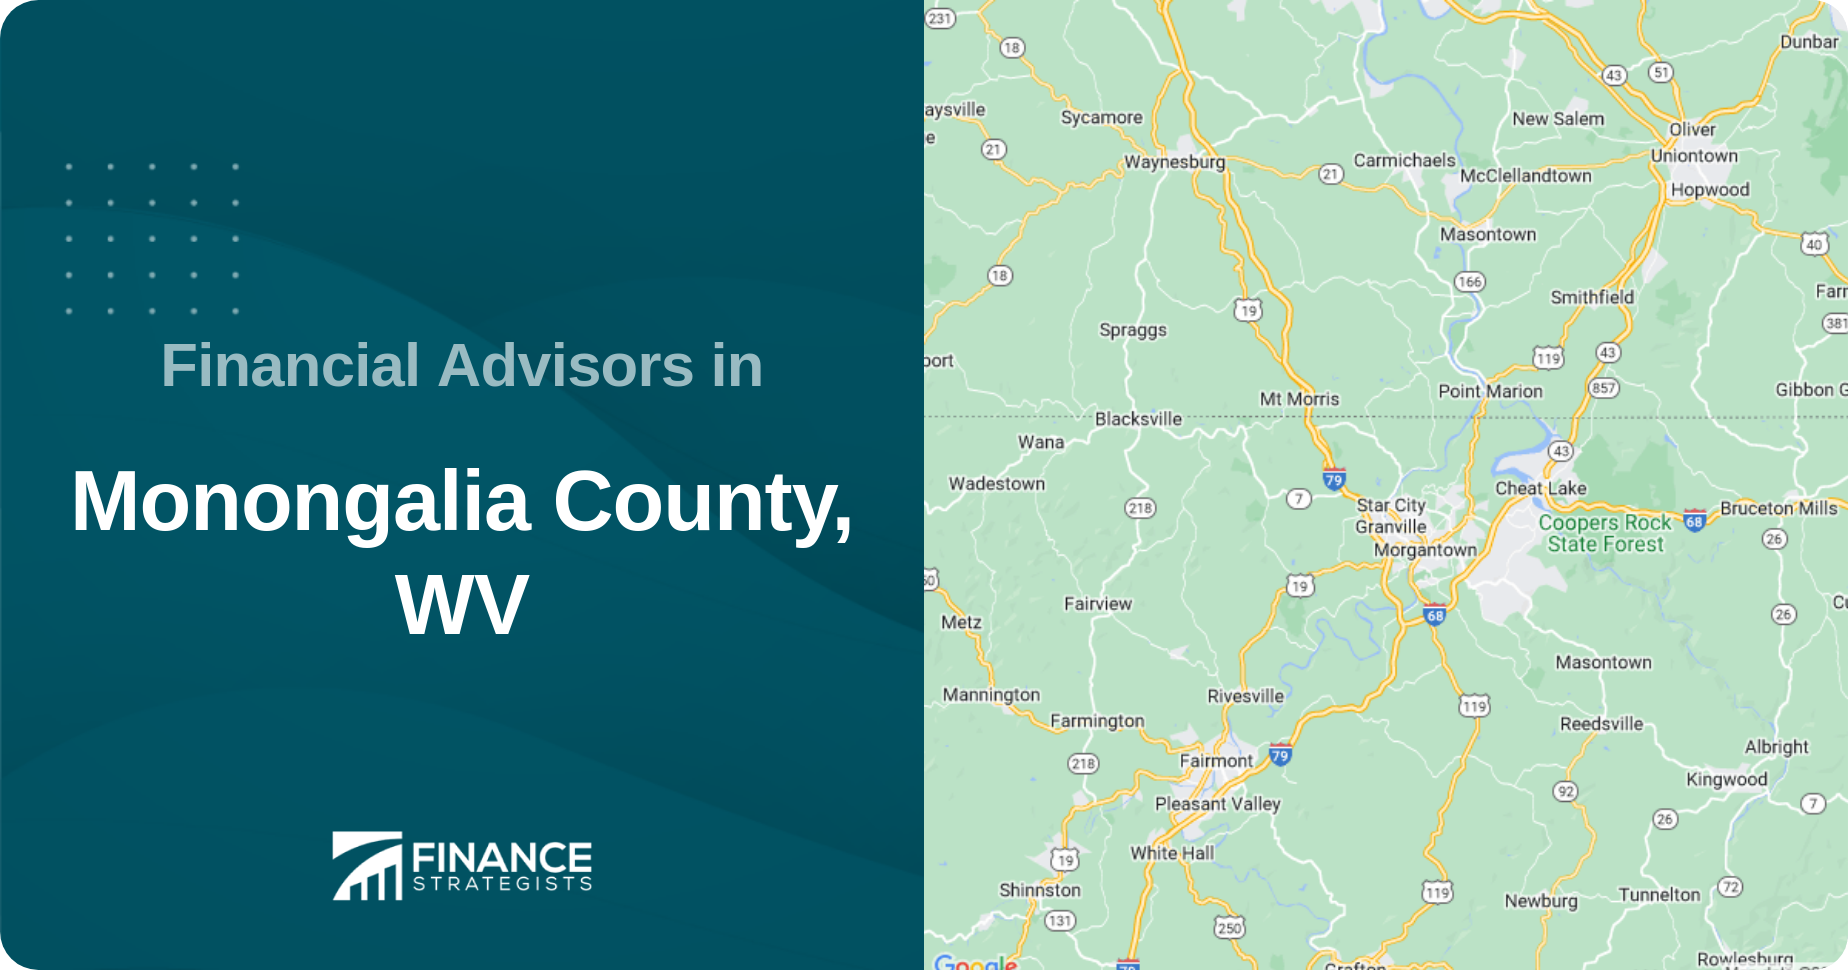 Financial Advisors in Monongalia County, WV